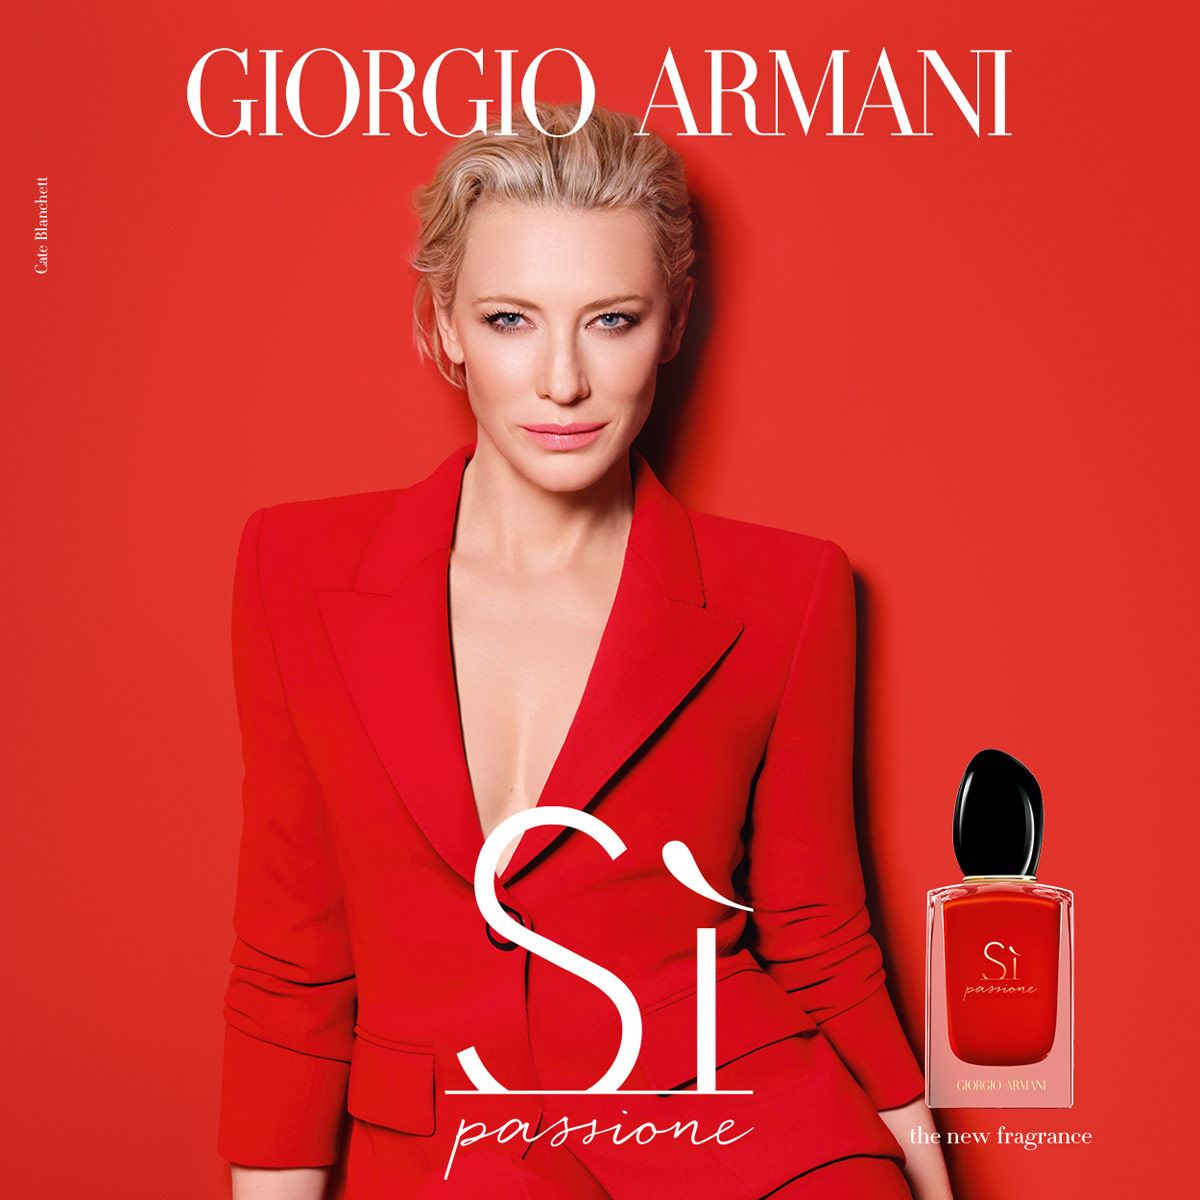 Giorgio Armani Si Passione Perfume Para Mujer 100 ml Eau de Parfum